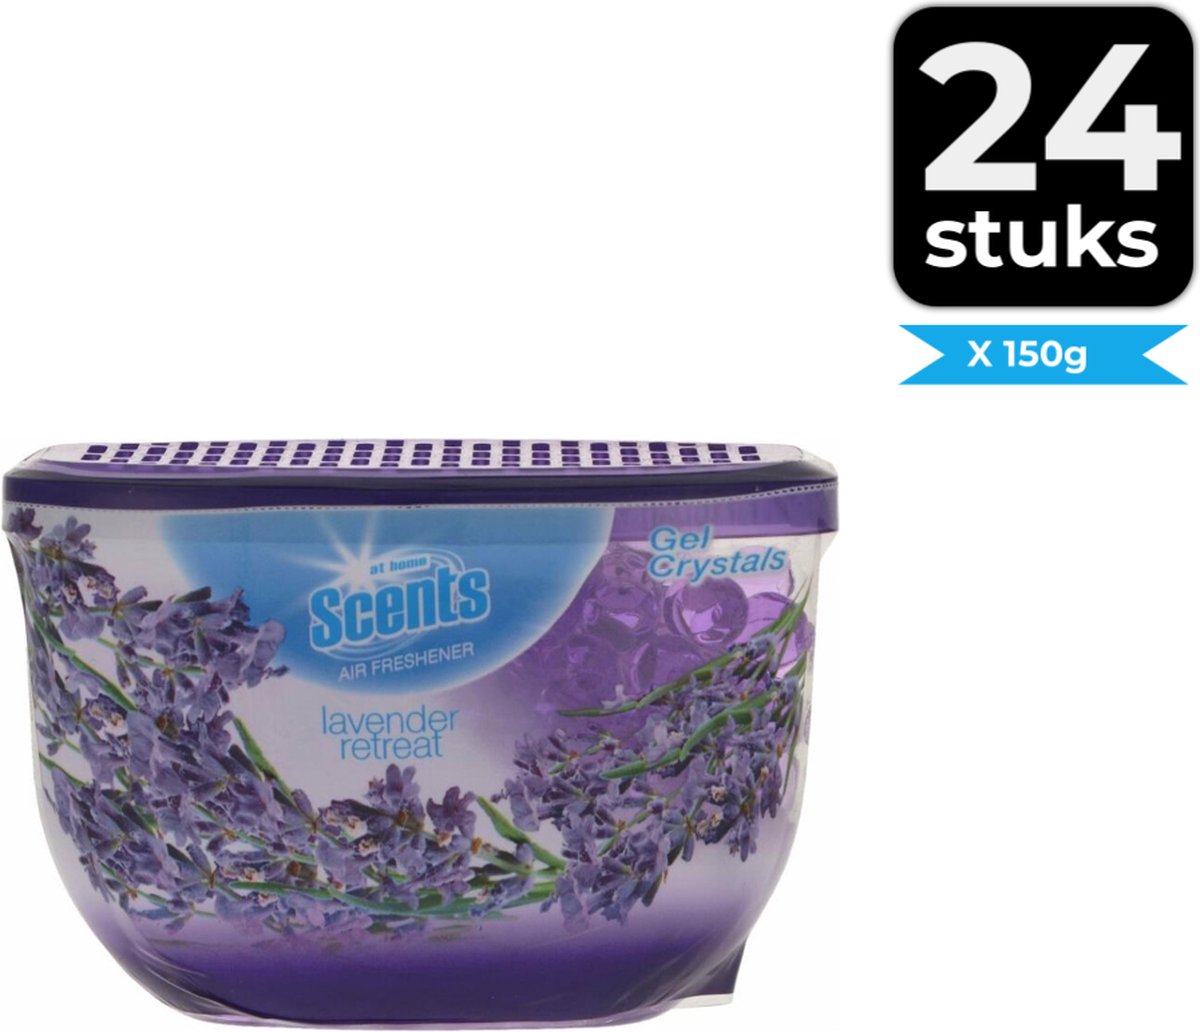 At Home Luchtverfrisser - Gel Crystals Lavendel & Kamille 150g - Voordeelverpakking 24 stuks